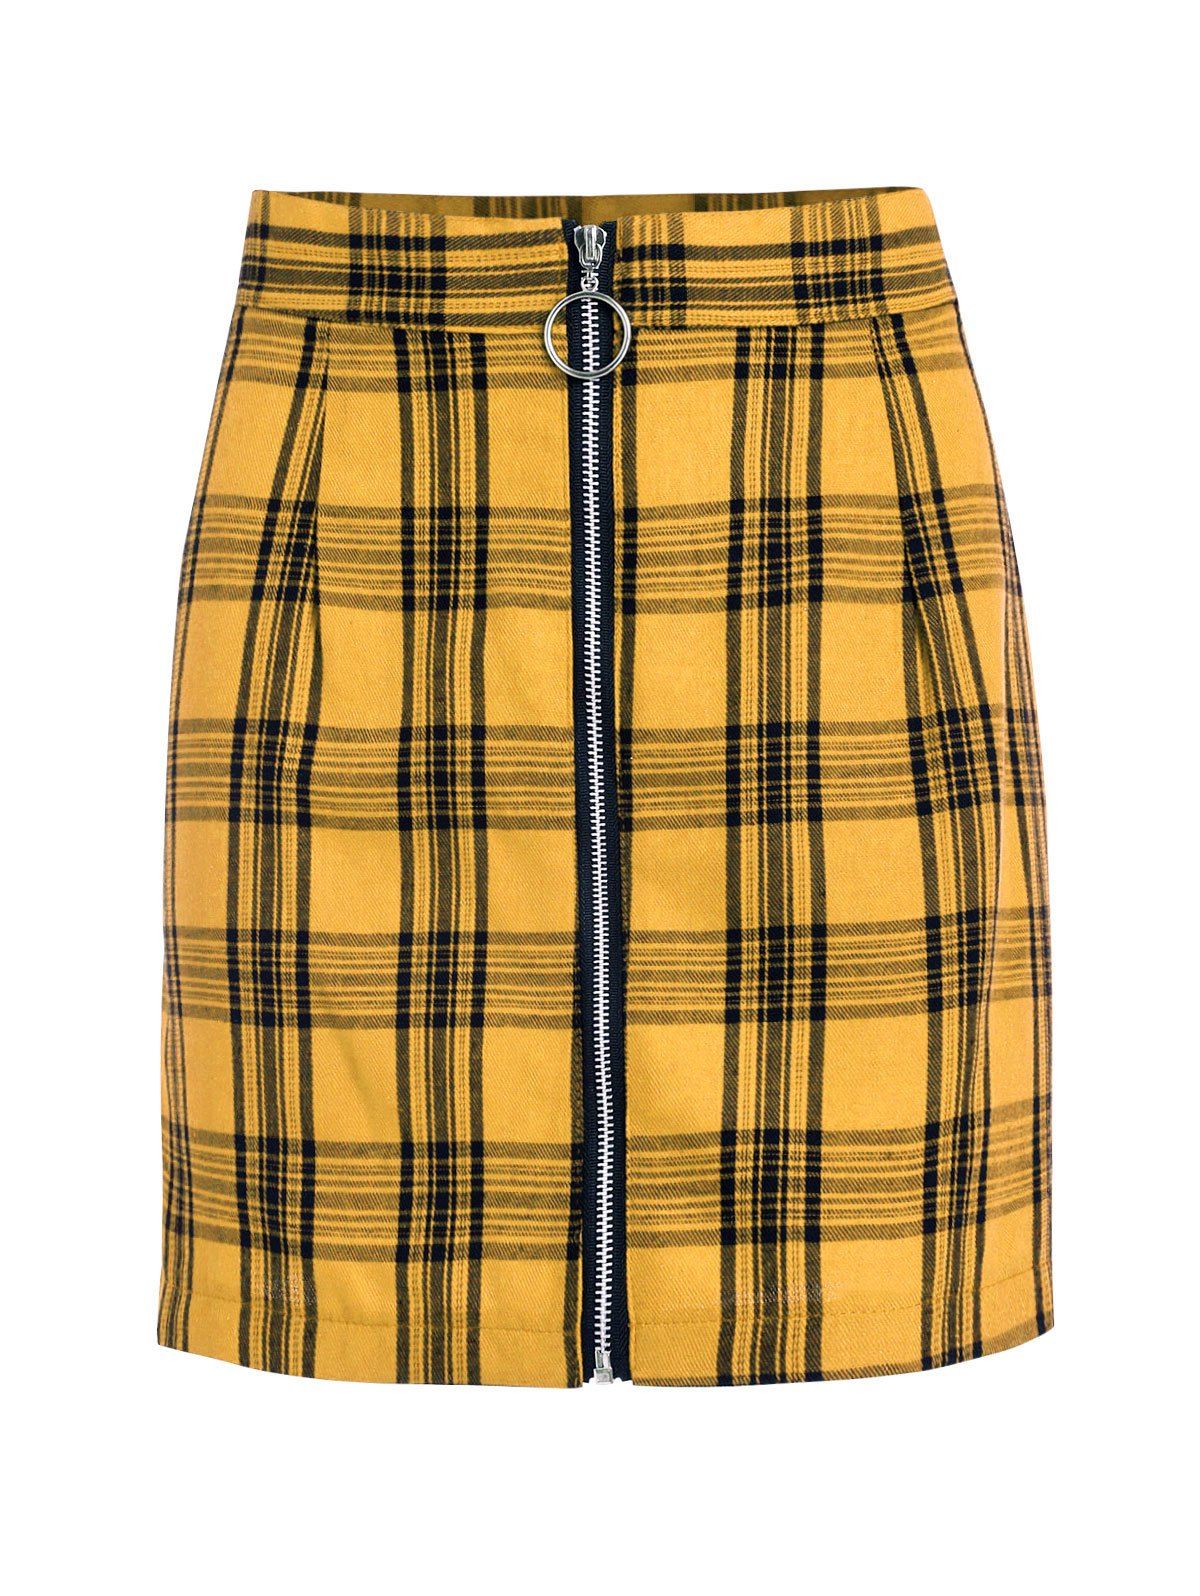 Front Zip Plaid Mini Skirt - YELLOW L